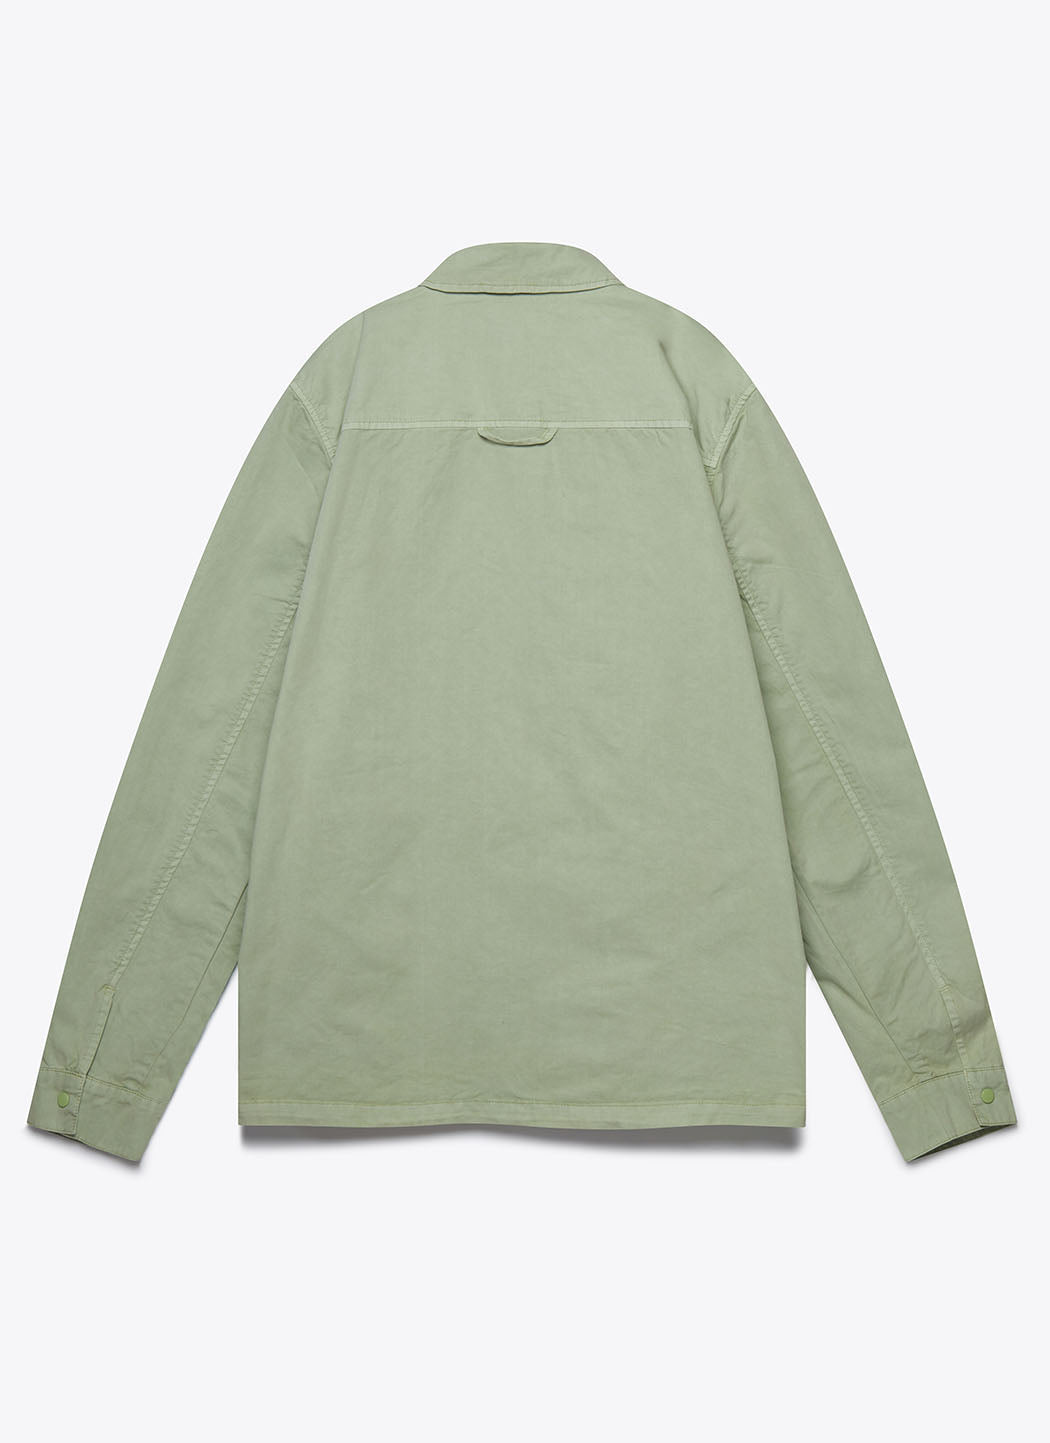 Penfield Blackstone Garment Dye Overshirt _ Dusty Green